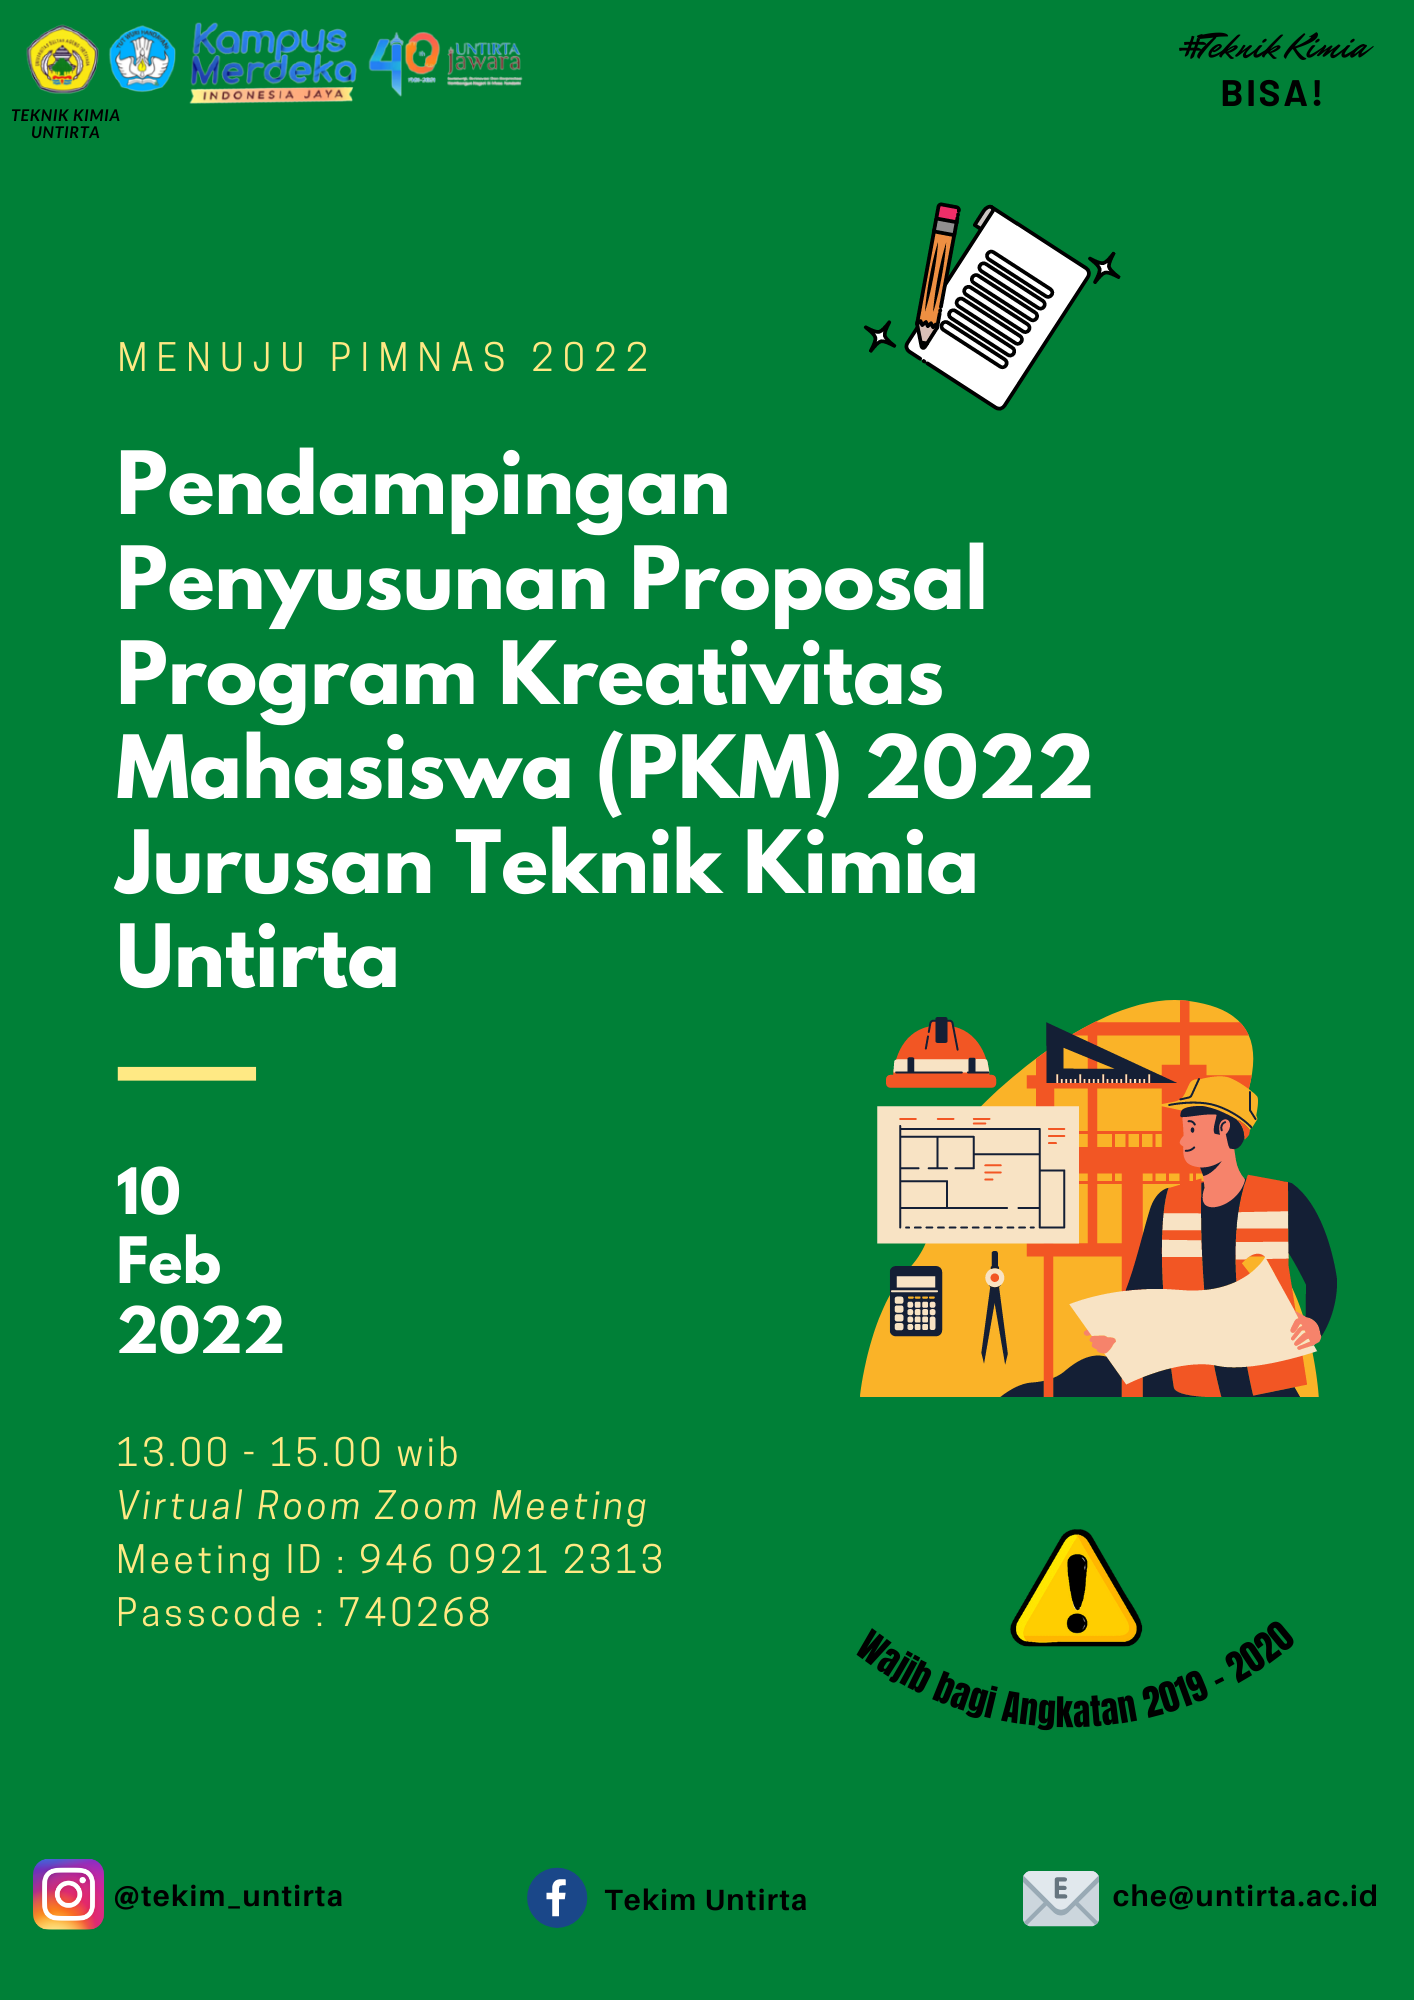 Pendampingan penyusunan proposal Program Kreativitas Mahasiswa (PKM) 2022 Jurusan Teknik Kimia Untir